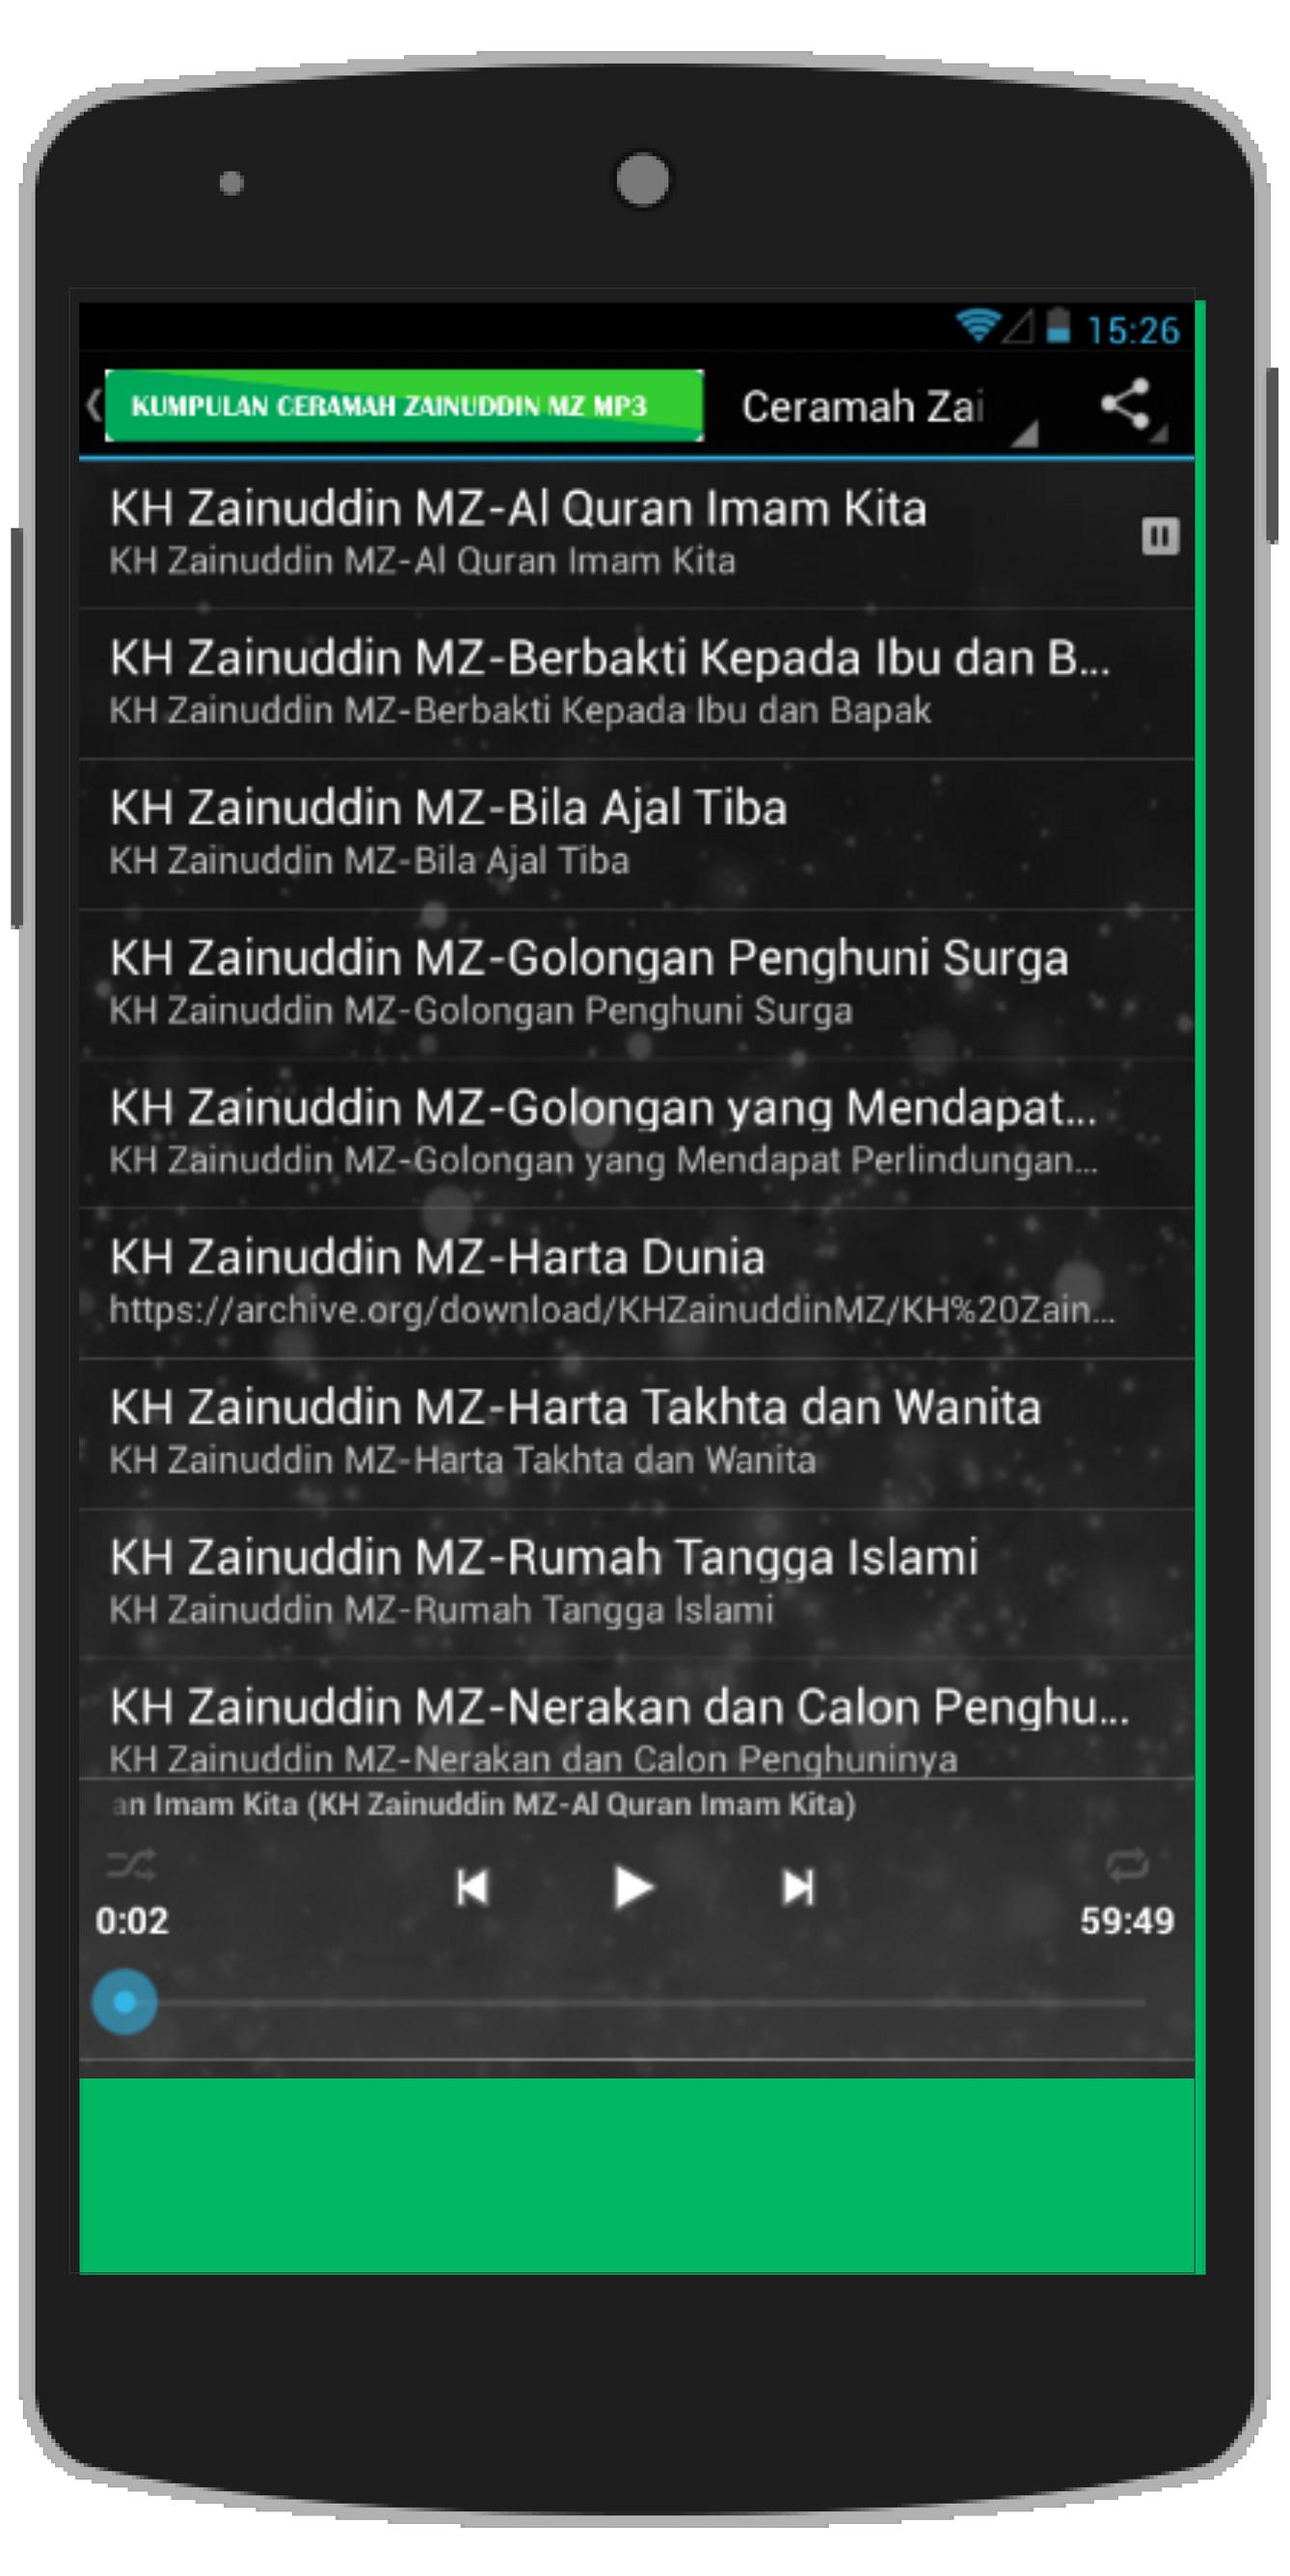 Ceramah Kh Zainuddin Mz Mp3 For Android Apk Download